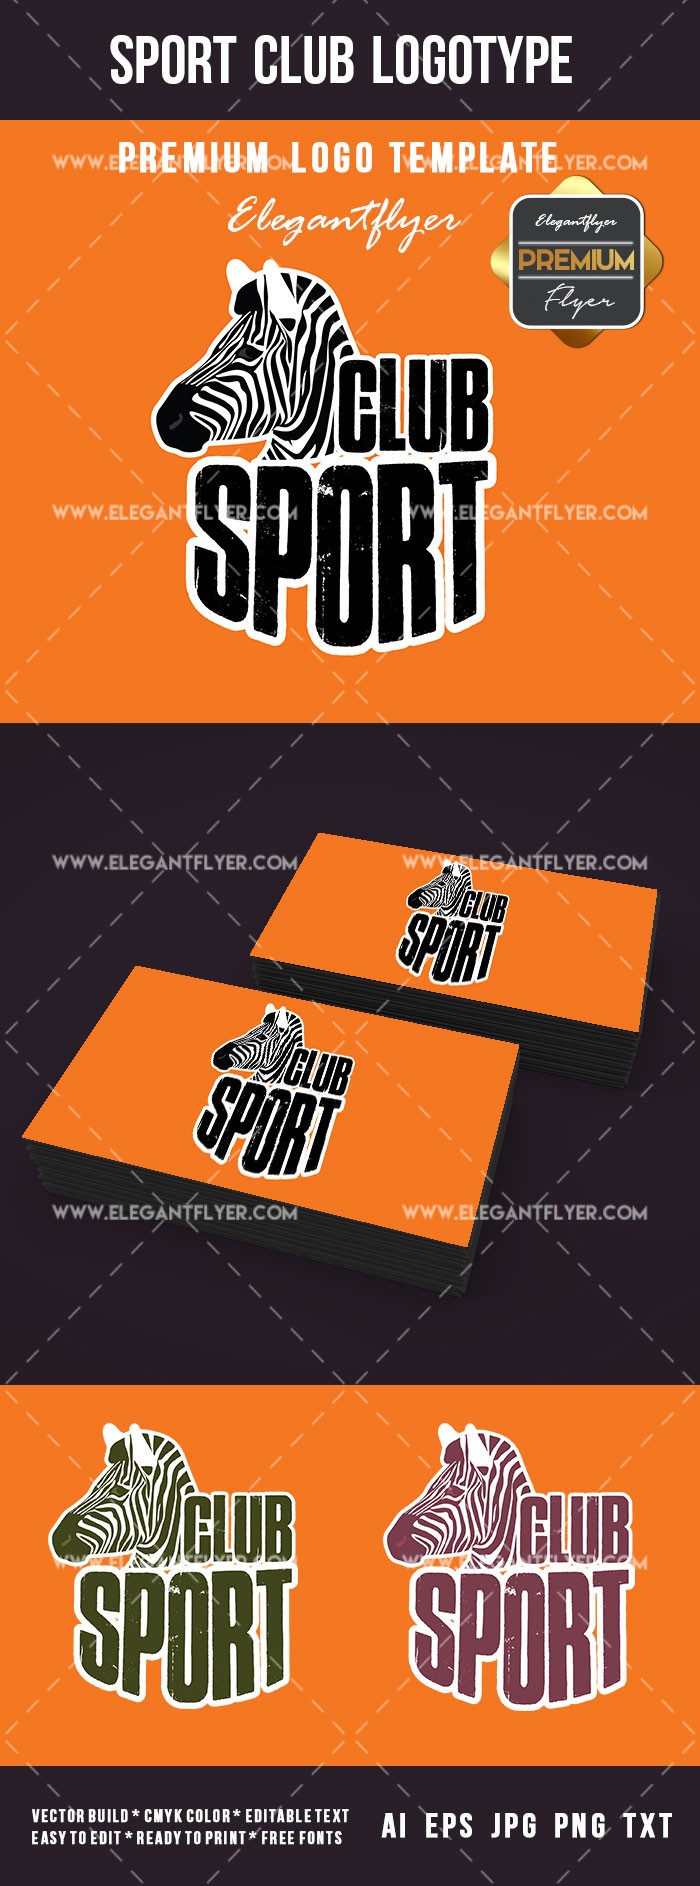 Sport Club Logotype by ElegantFlyer